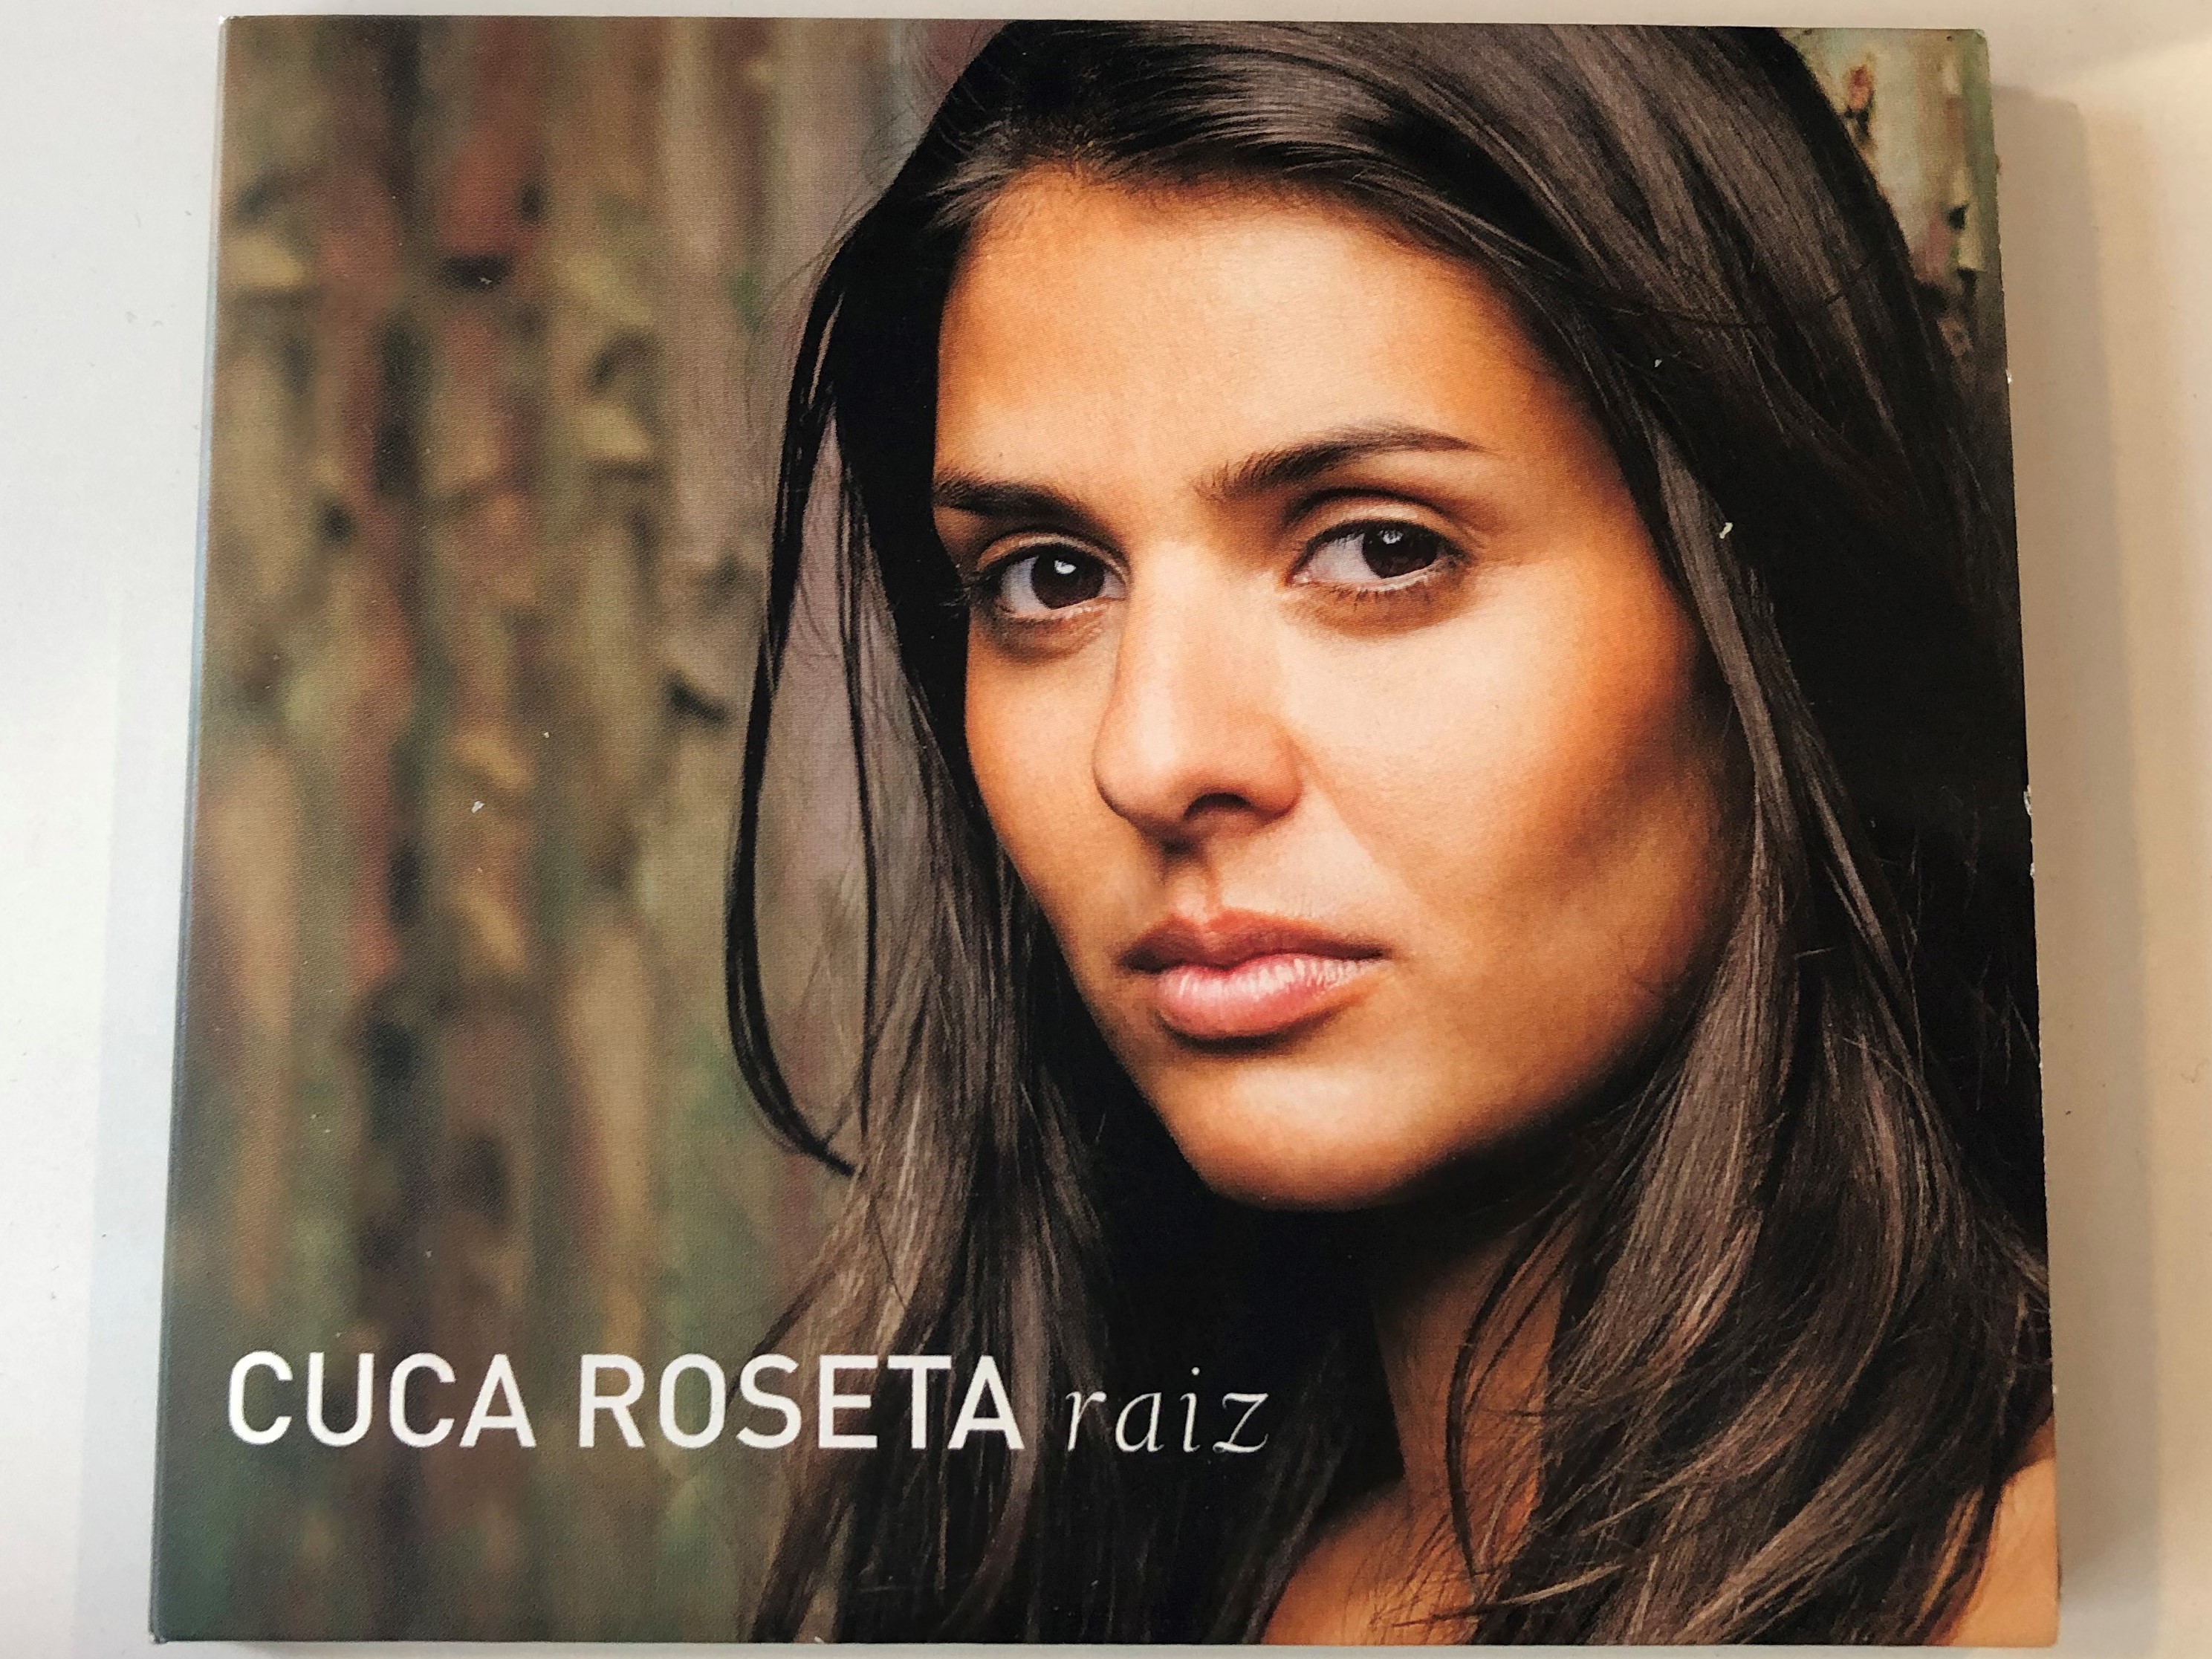 cuca-roseta-raiz-universal-music-portugal-audio-cd-2013-0602537366576-1-.jpg